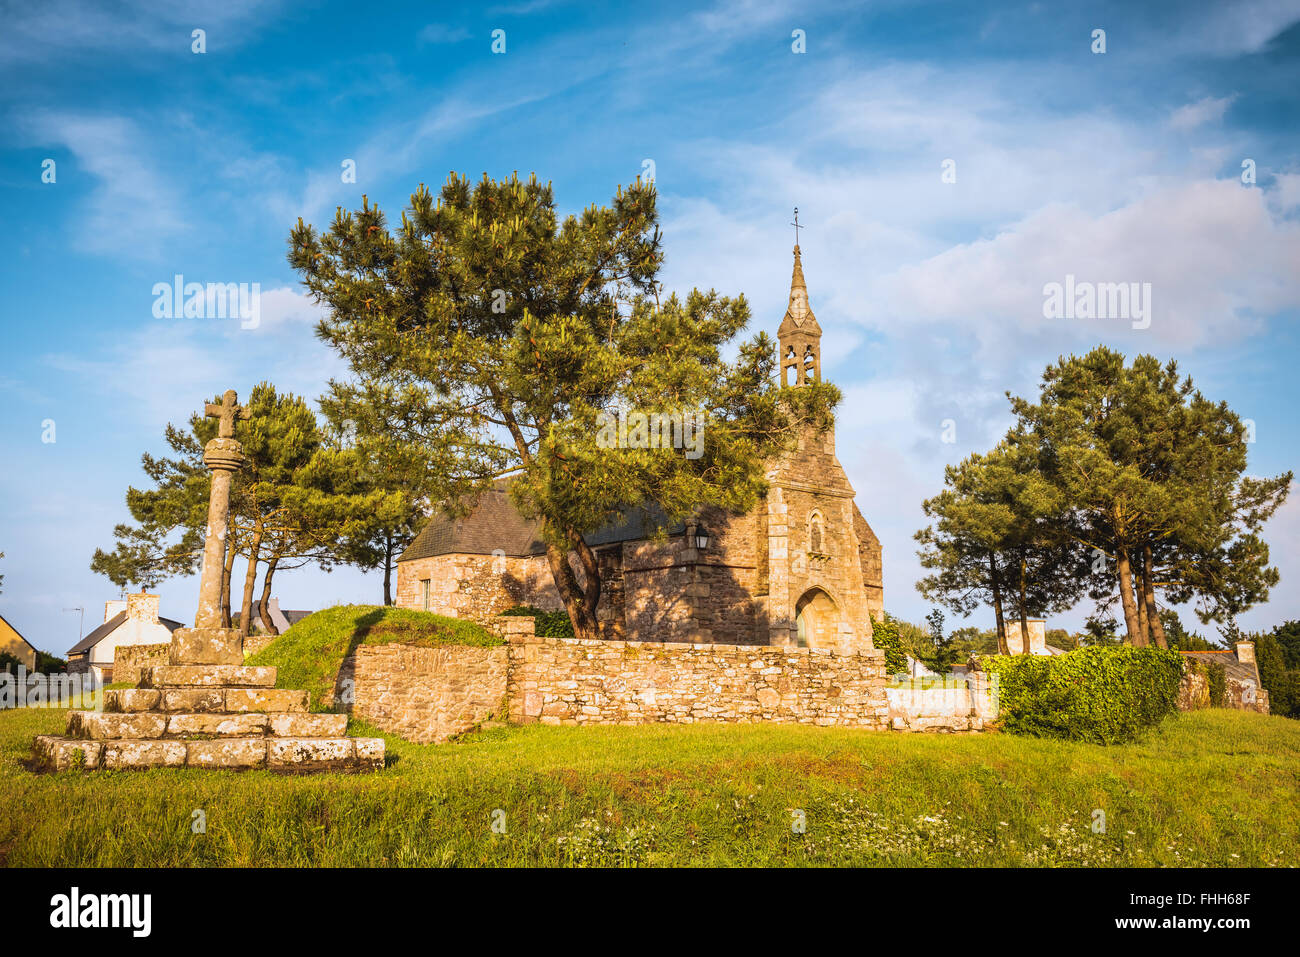 Alte mittelalterliche Kirche in Bretagne, Frankreich Stockfoto